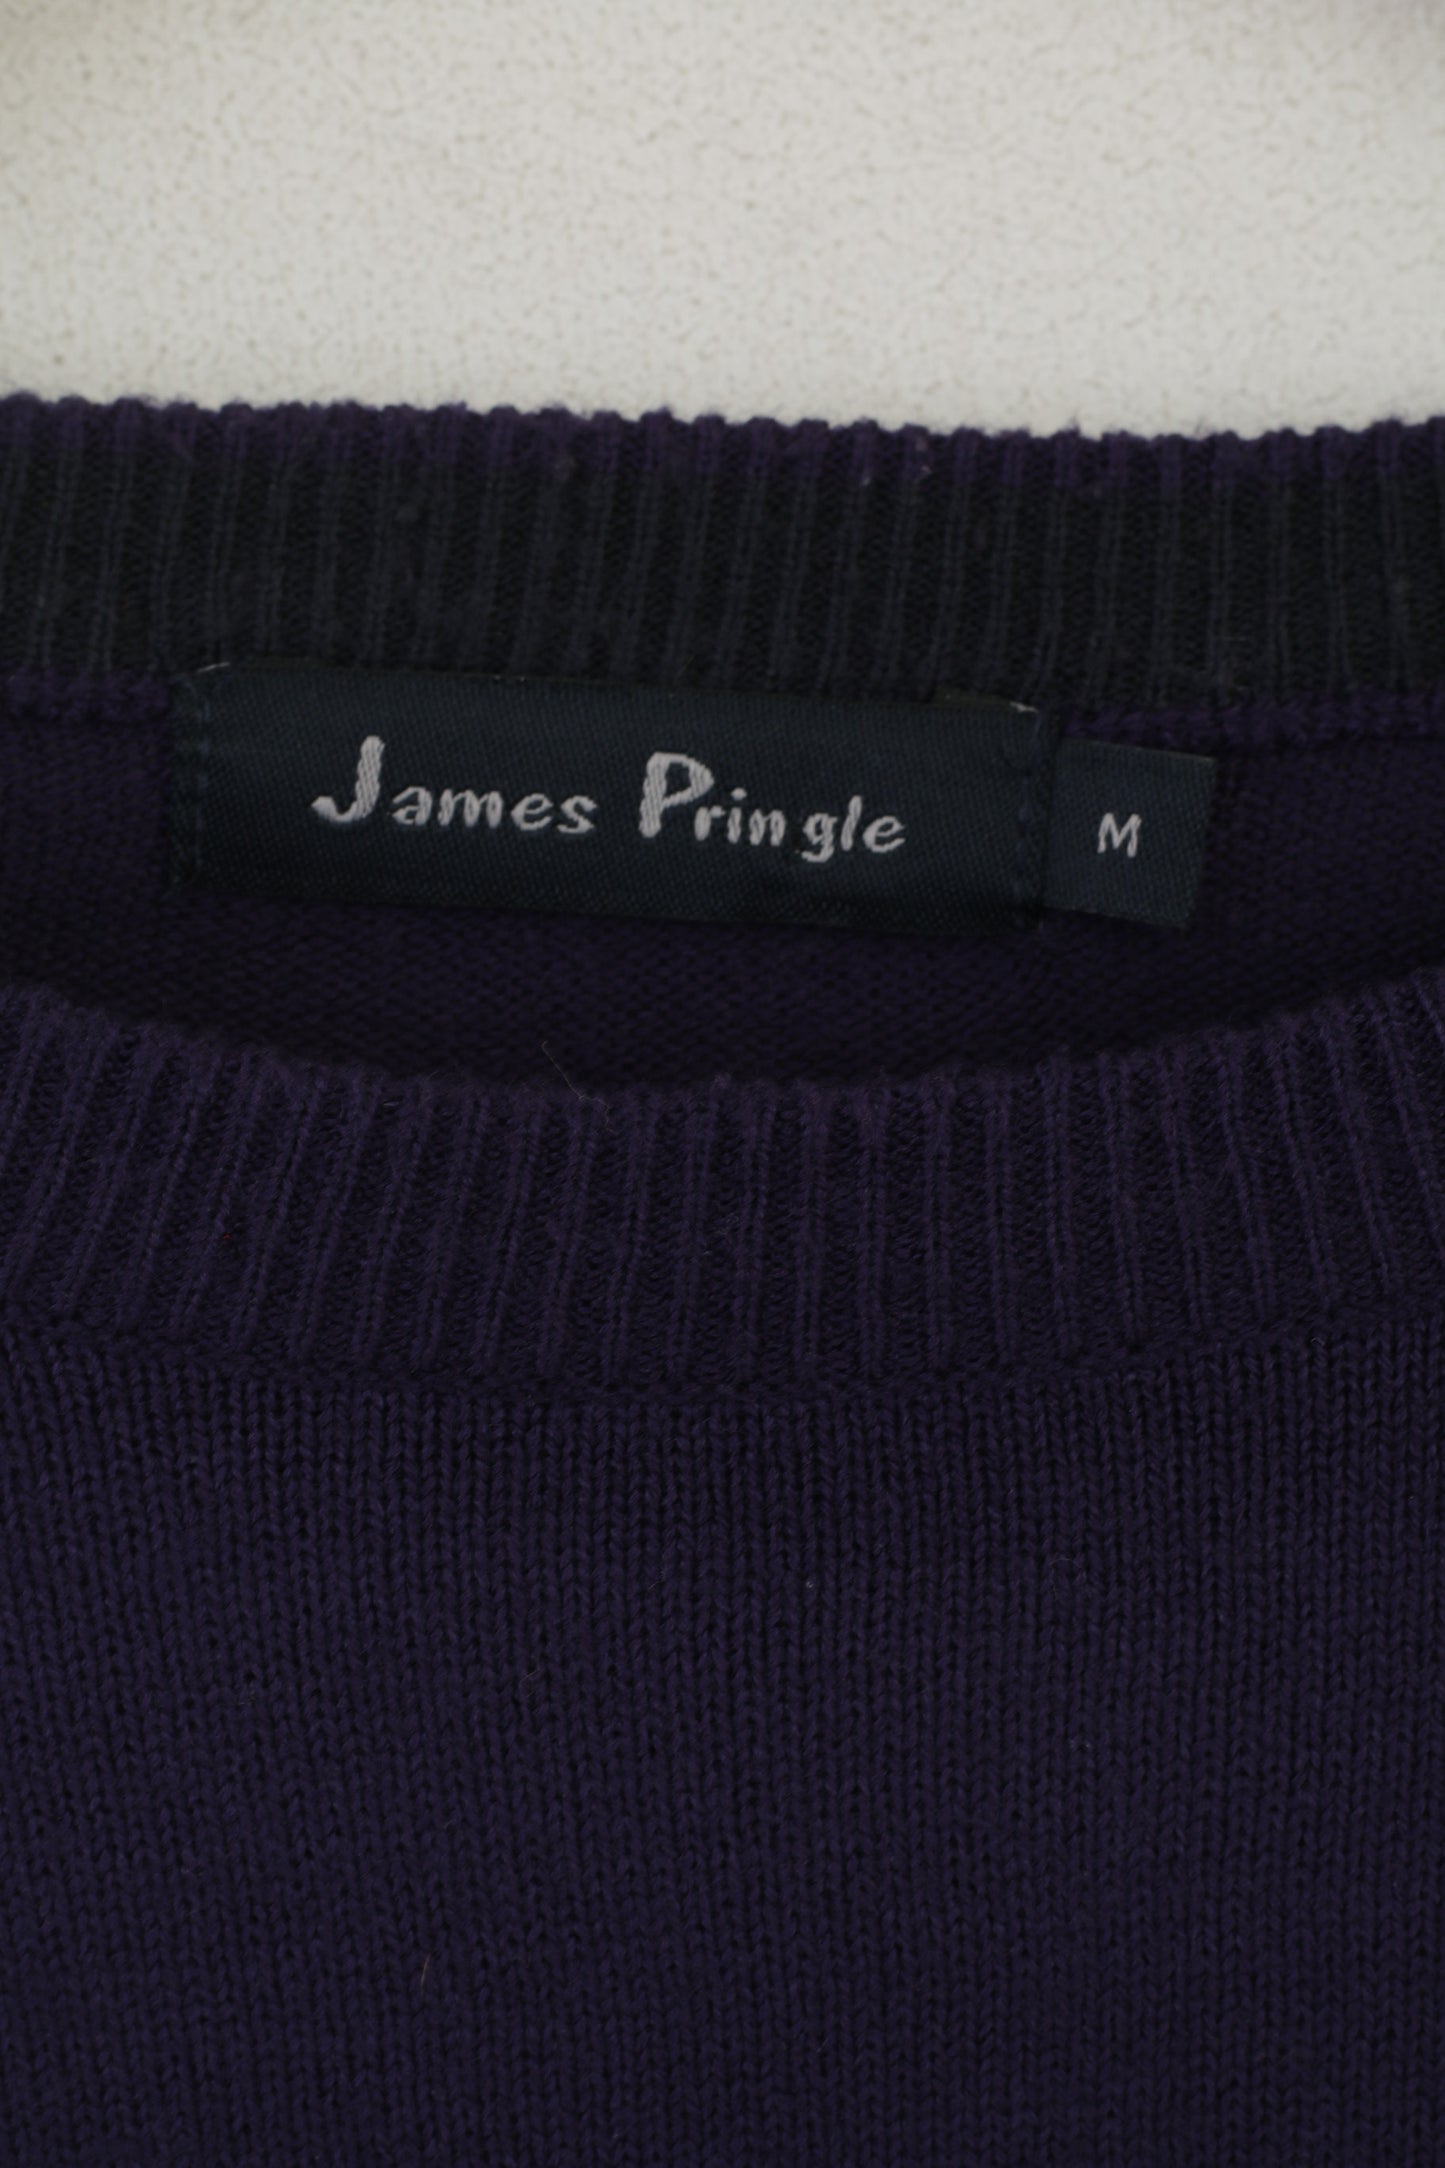 James Pringle Men M Jumper Purple Acrylic Crew Neck Soft Plain Sweater